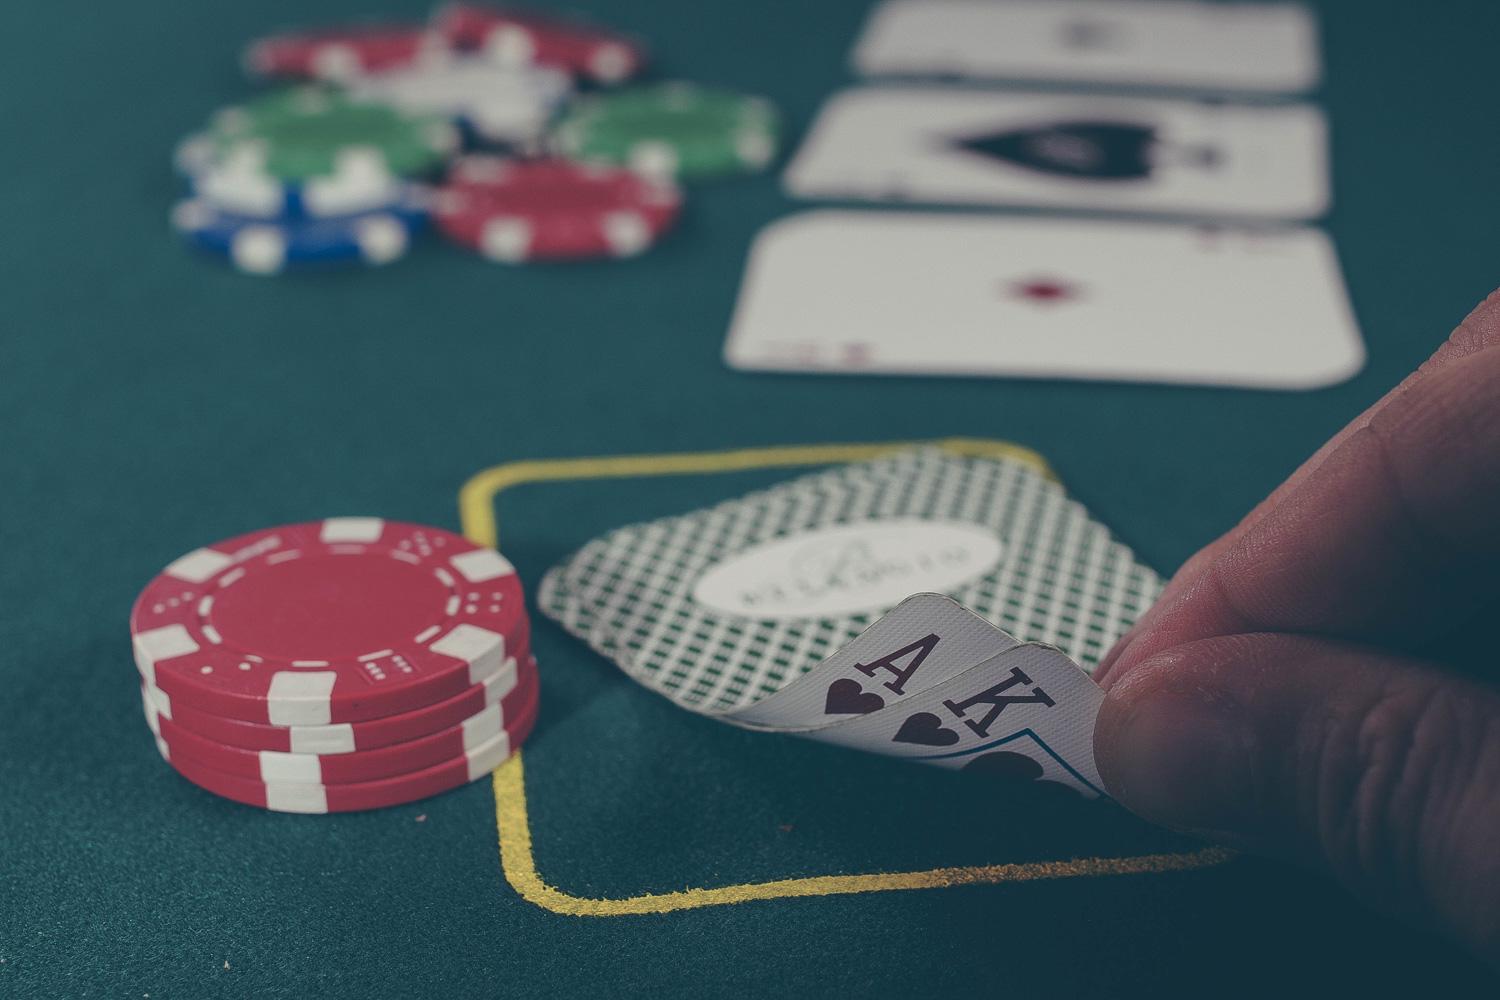 London casino texas holdem poker